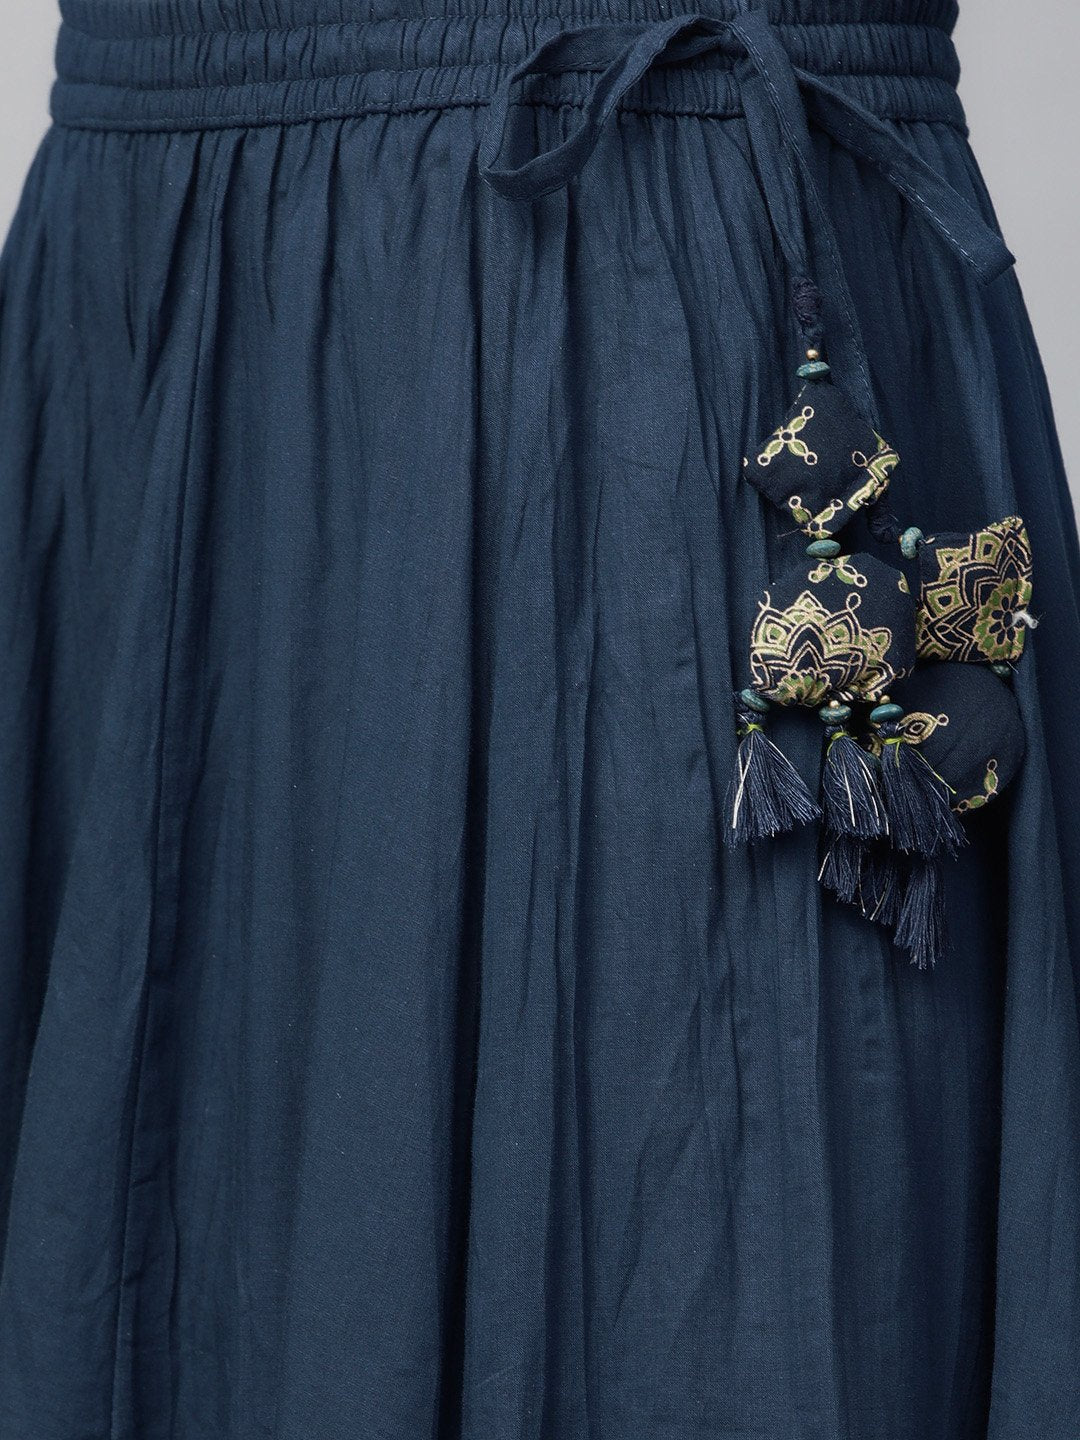 Ishin Women's Cotton Navy Blue Foil Printed A-Line Kurta Palazzo Set